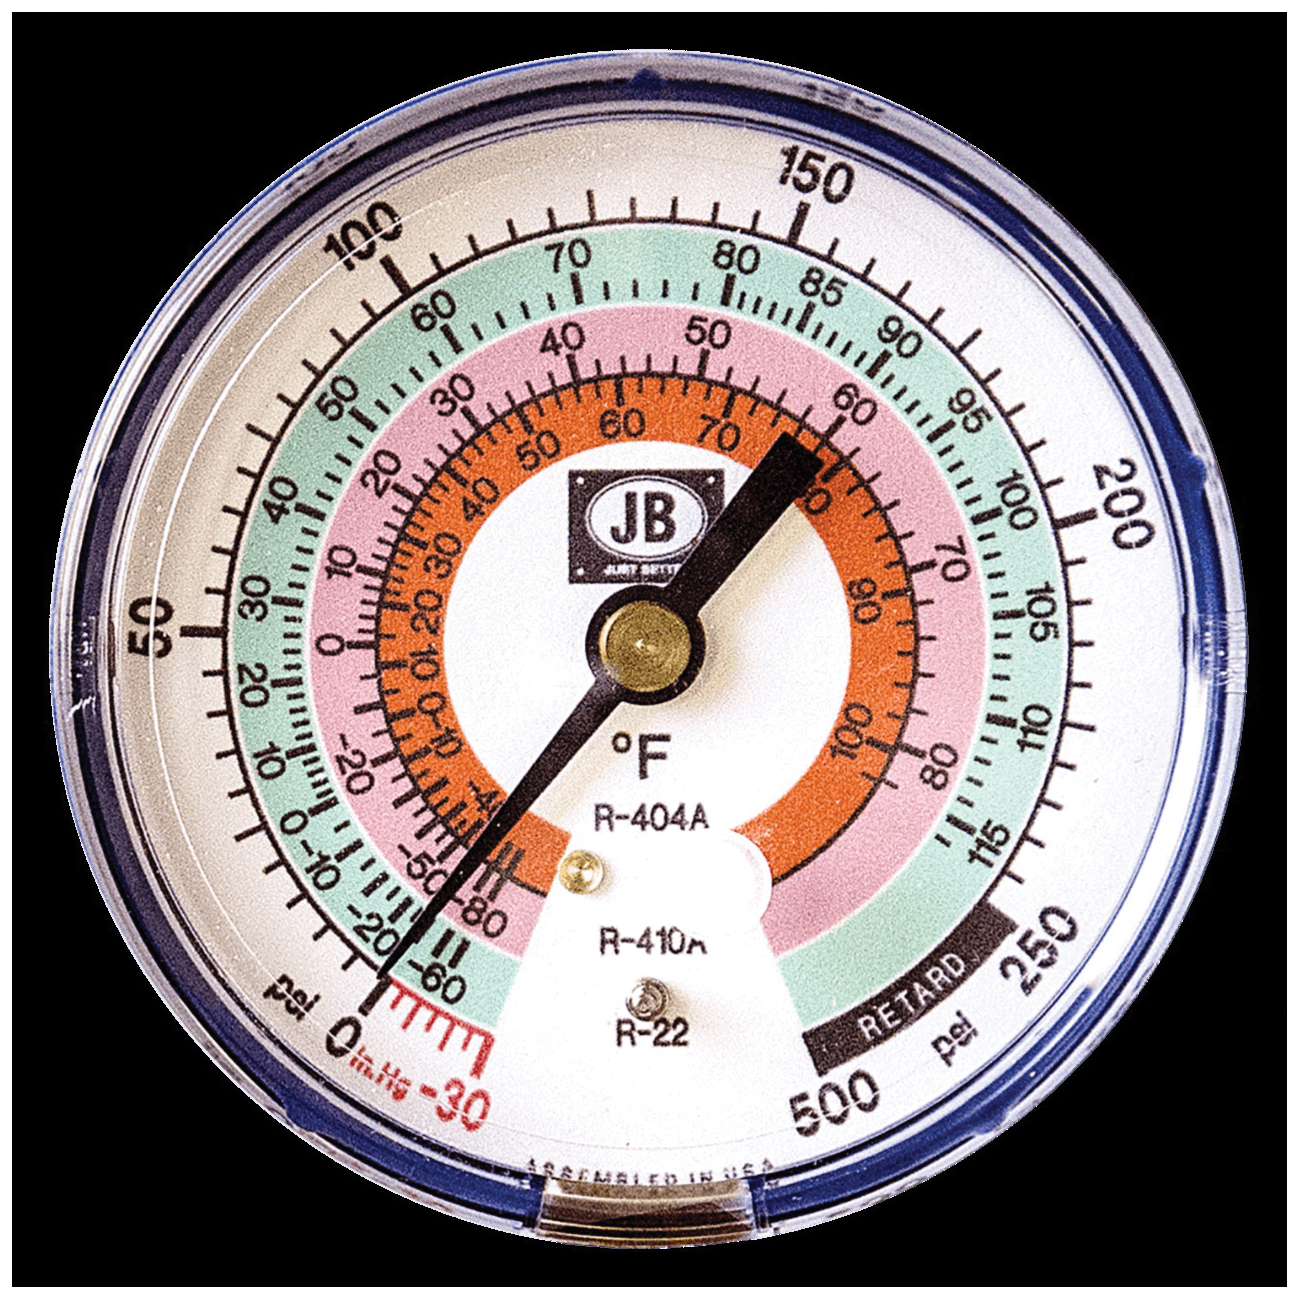 JB Industries M2-924CM Pressure Gauge, 3-1/8 in Dial, 30 inHg to 500 psi Measuring Range, Class 1:1% Accuracy